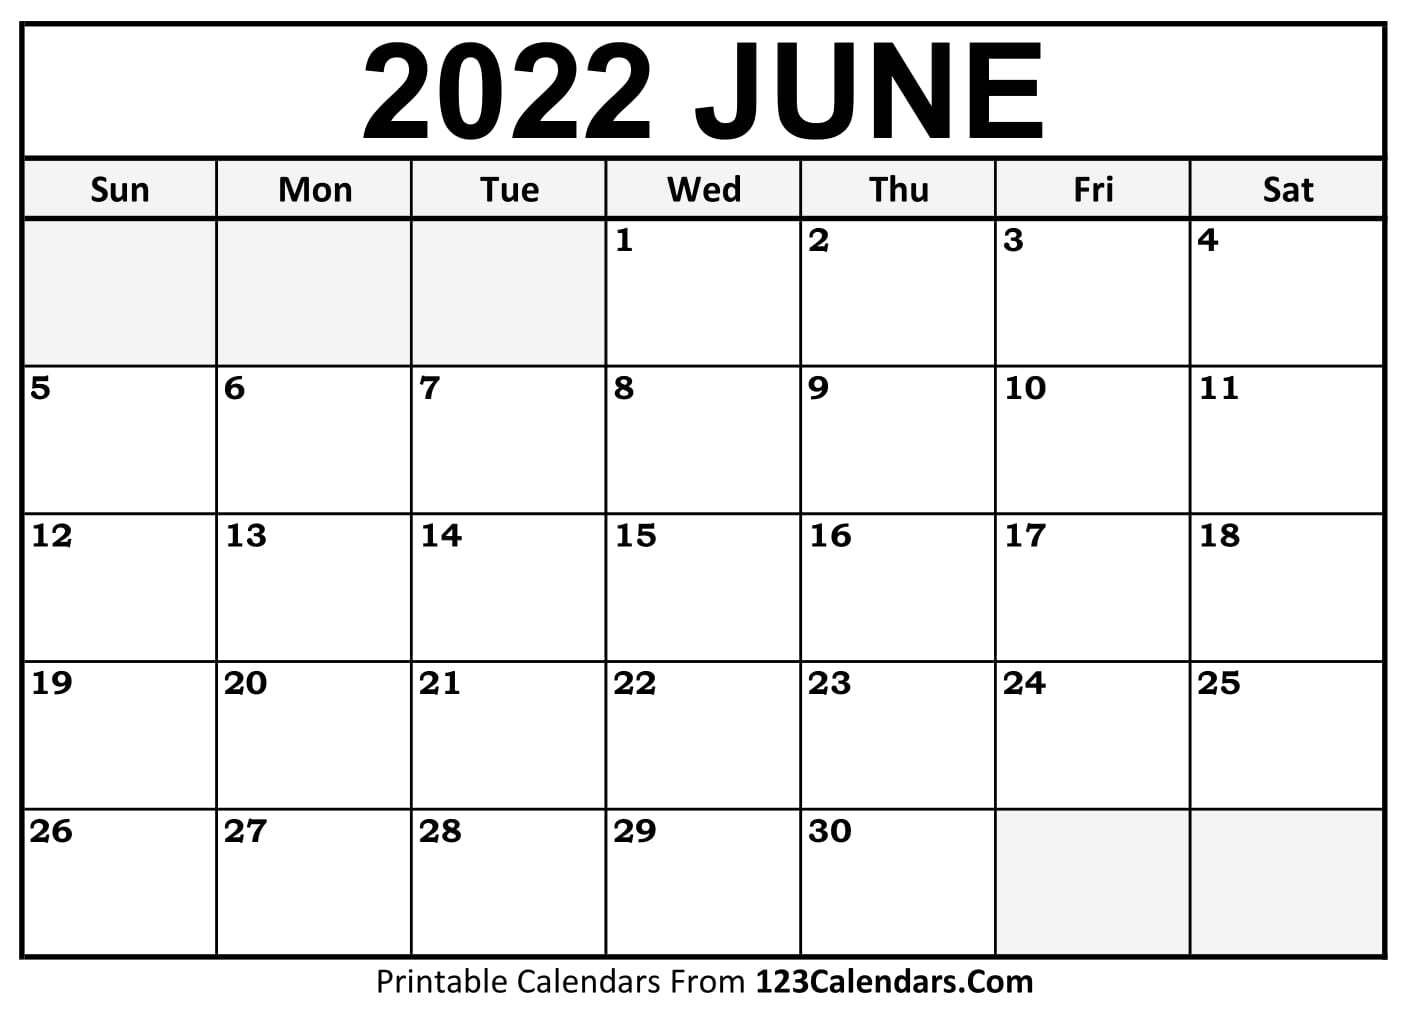 Print A Calendar June 2022 Printable June 2022 Calendar Templates - 123Calendars.com